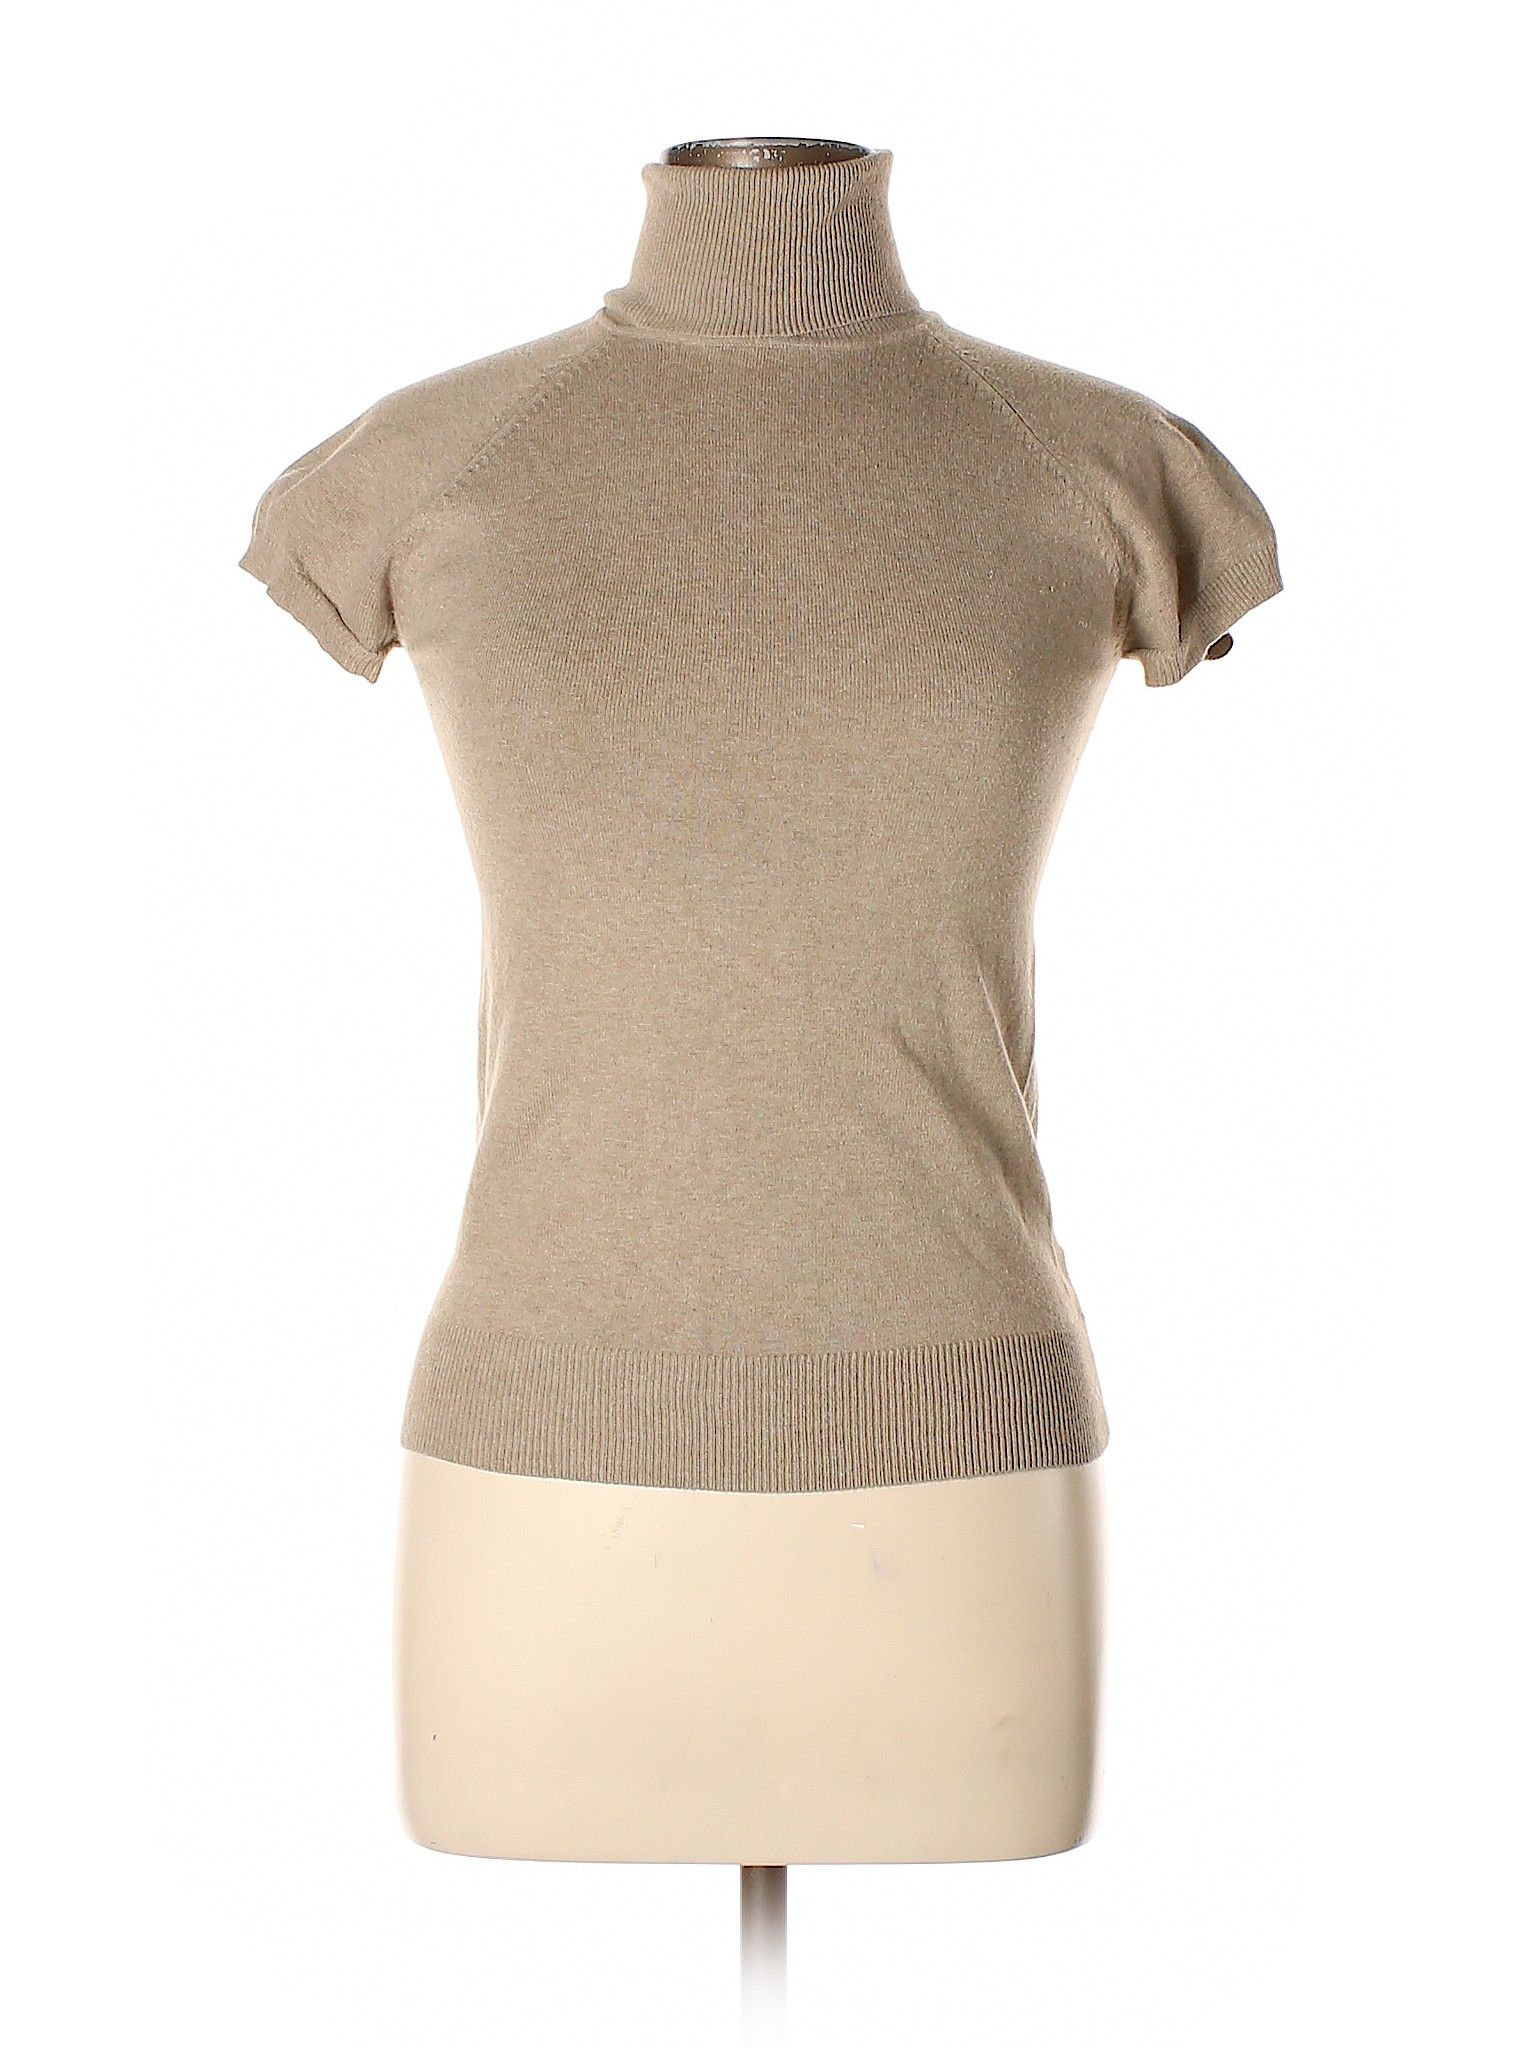 Zara Turtleneck Sweater Size 8: Tan Women's Tops - 44142532 | thredUP